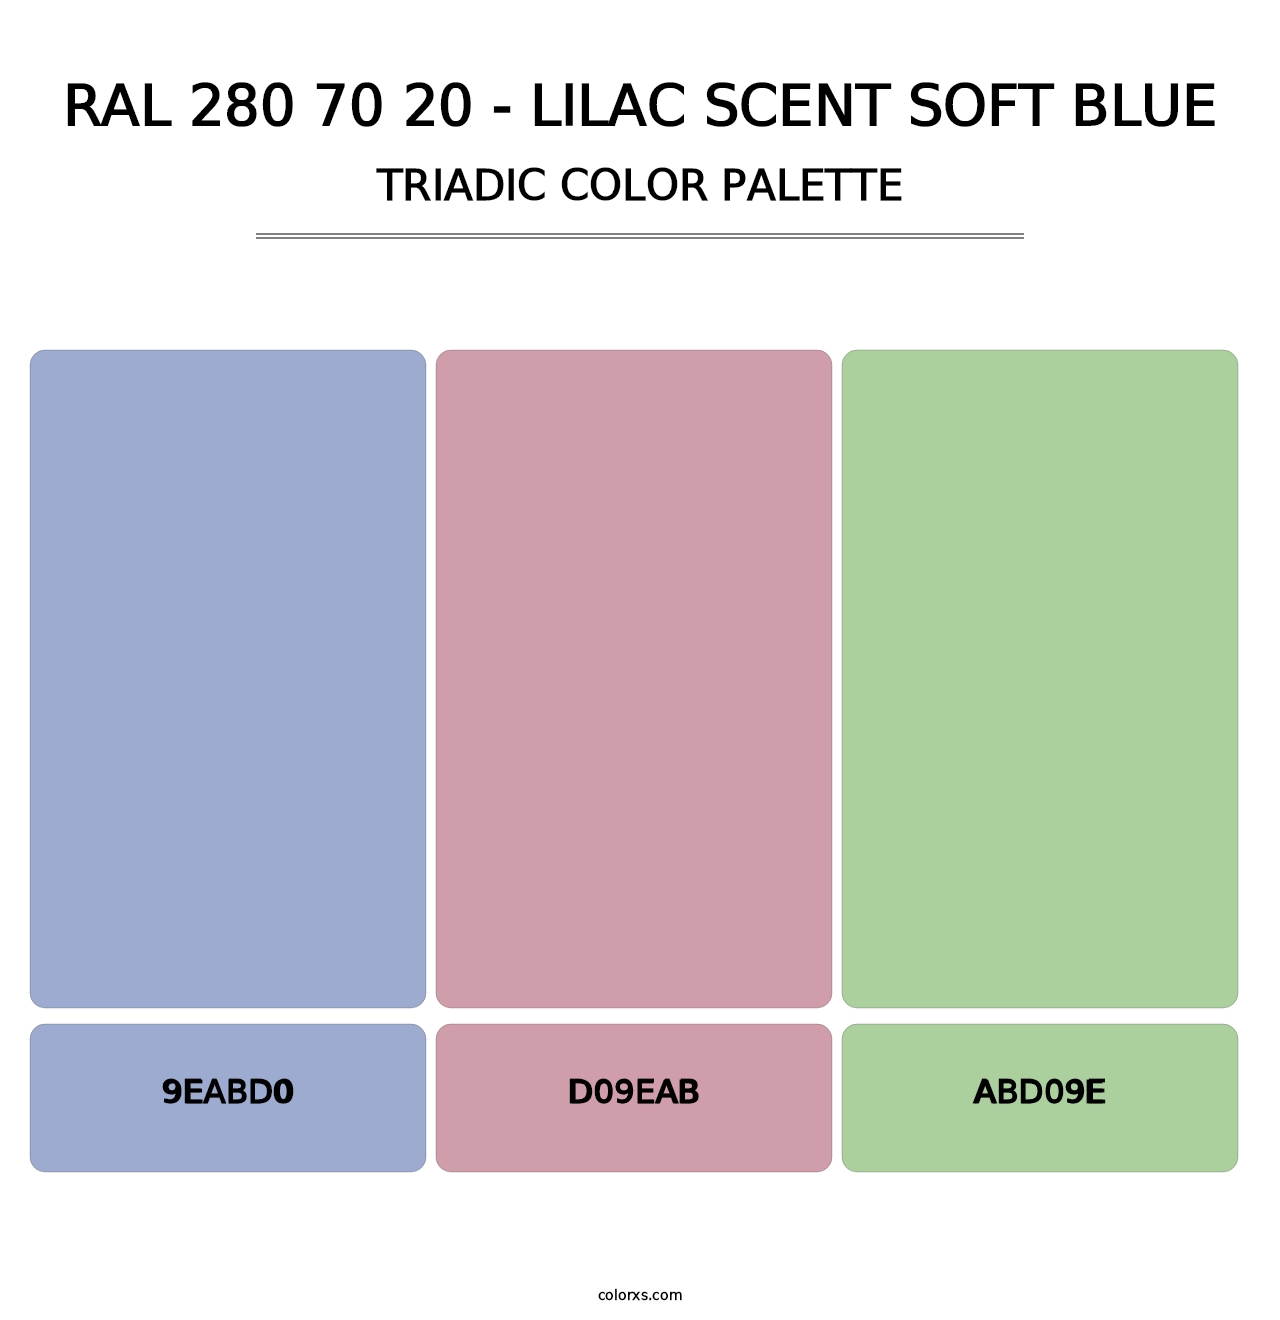 RAL 280 70 20 - Lilac Scent Soft Blue - Triadic Color Palette